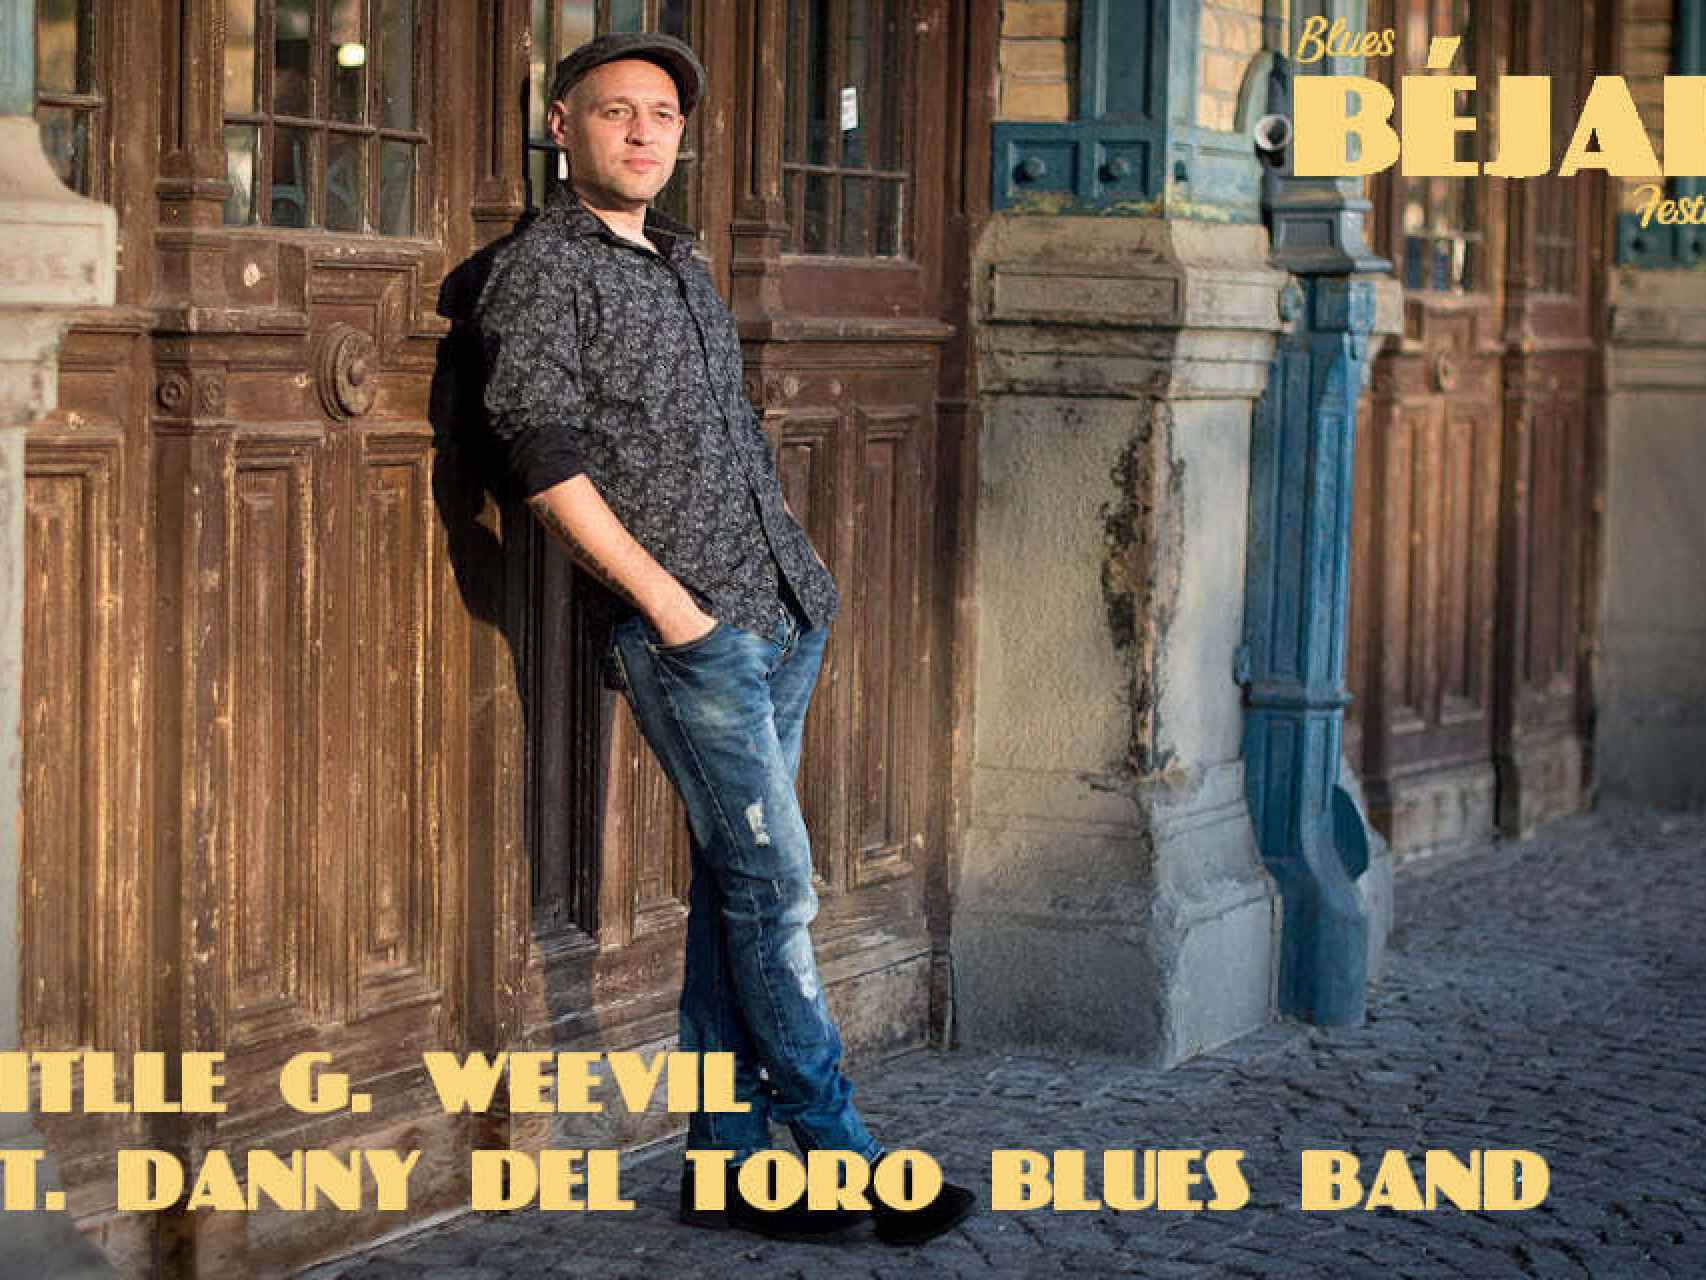 Little G Weevil Feat. Danny del Toro Blues Band